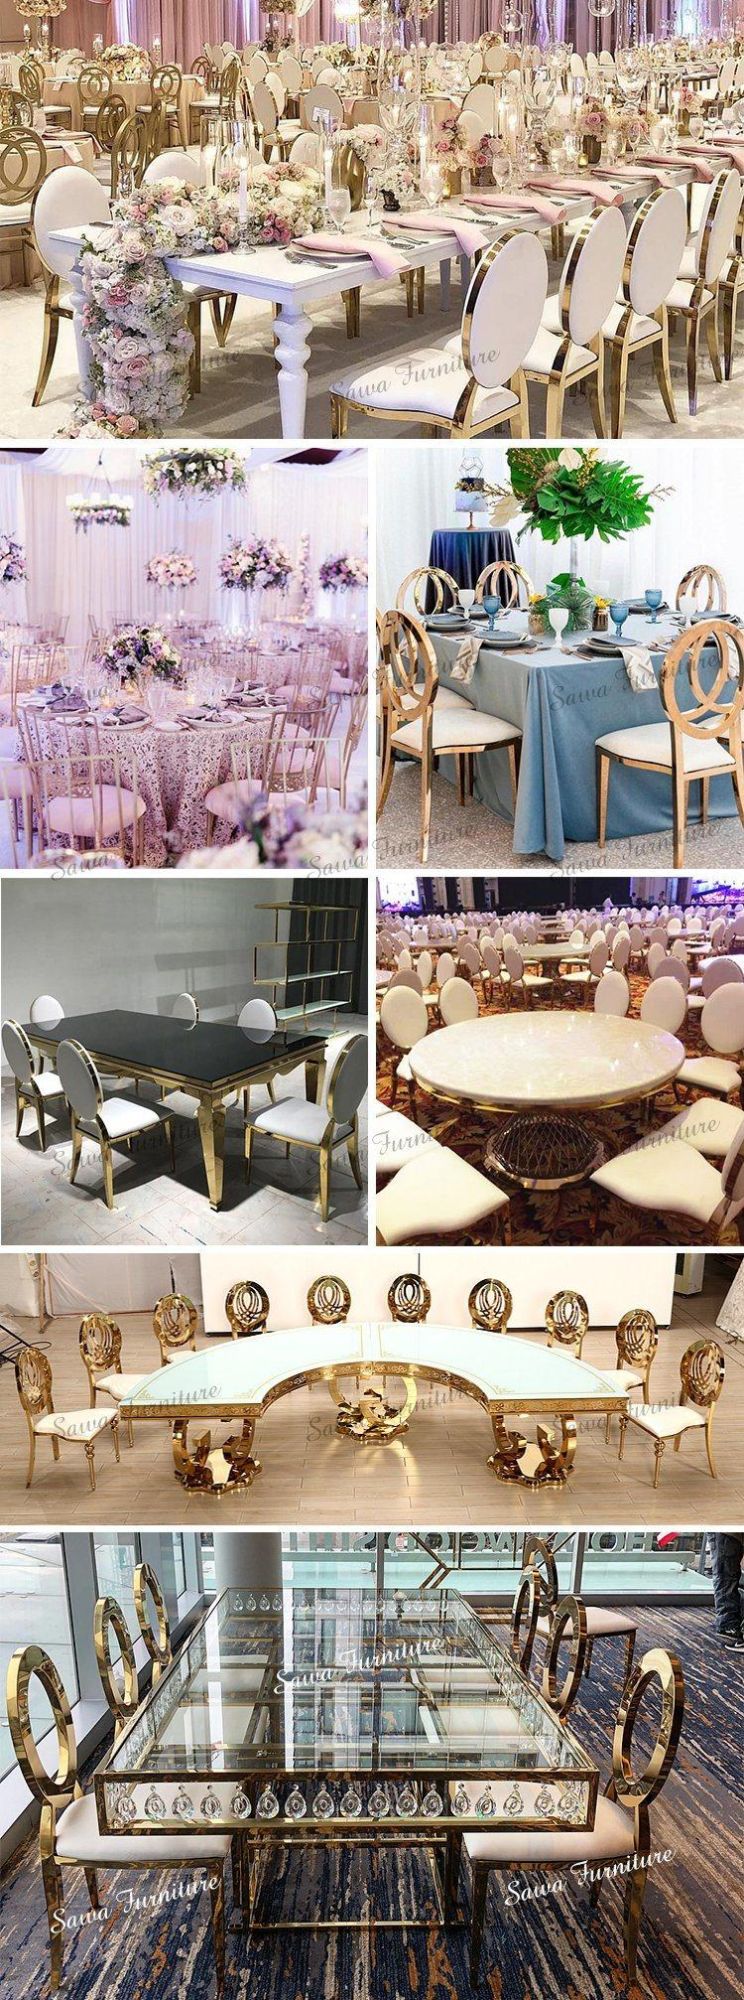 Commercial Furniture Supplier Golden Wedding Archstainless Steel Frame Banquet Eevnt Party